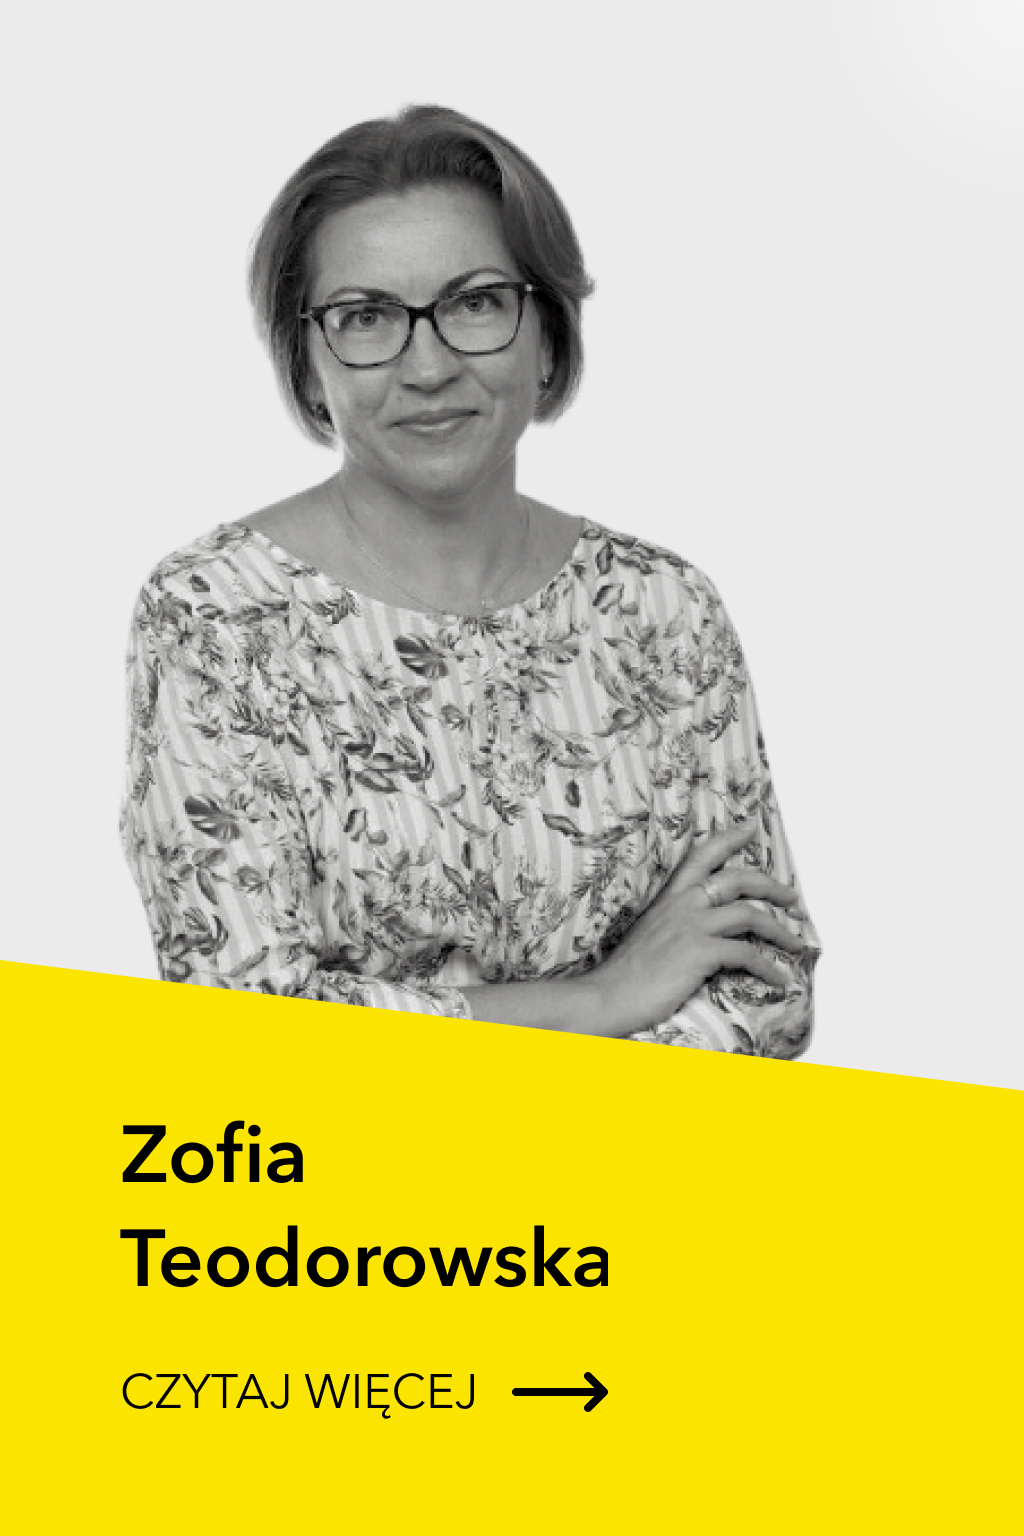 Zofia Teodorowska